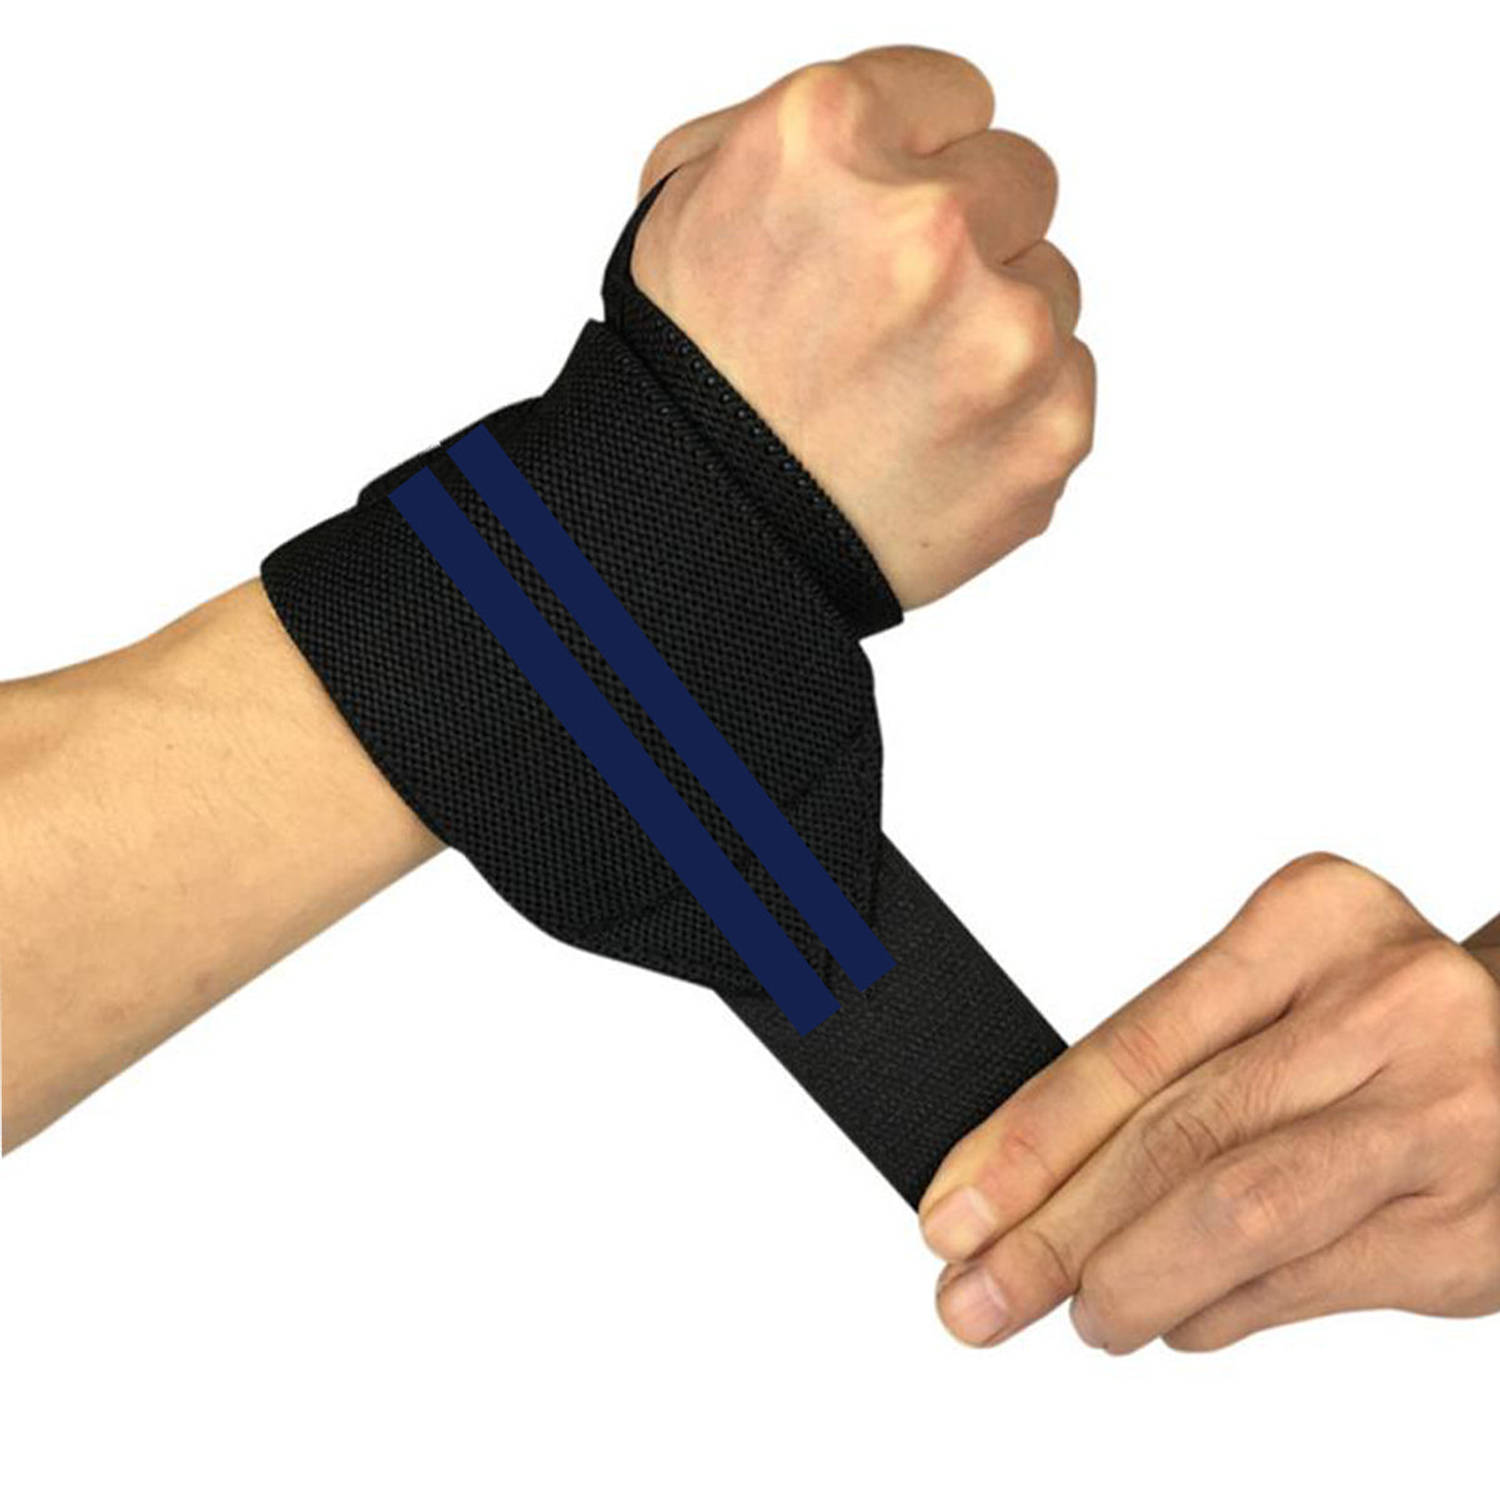 Fitness / Crossfit Polsband - 2 stuks - Blauw / Zwart - Polsbandage Wrist Support Wraps - Pols Bandage Band - Bodybuilding Support - Gewichthef Straps - Krachttraining Lifting Work